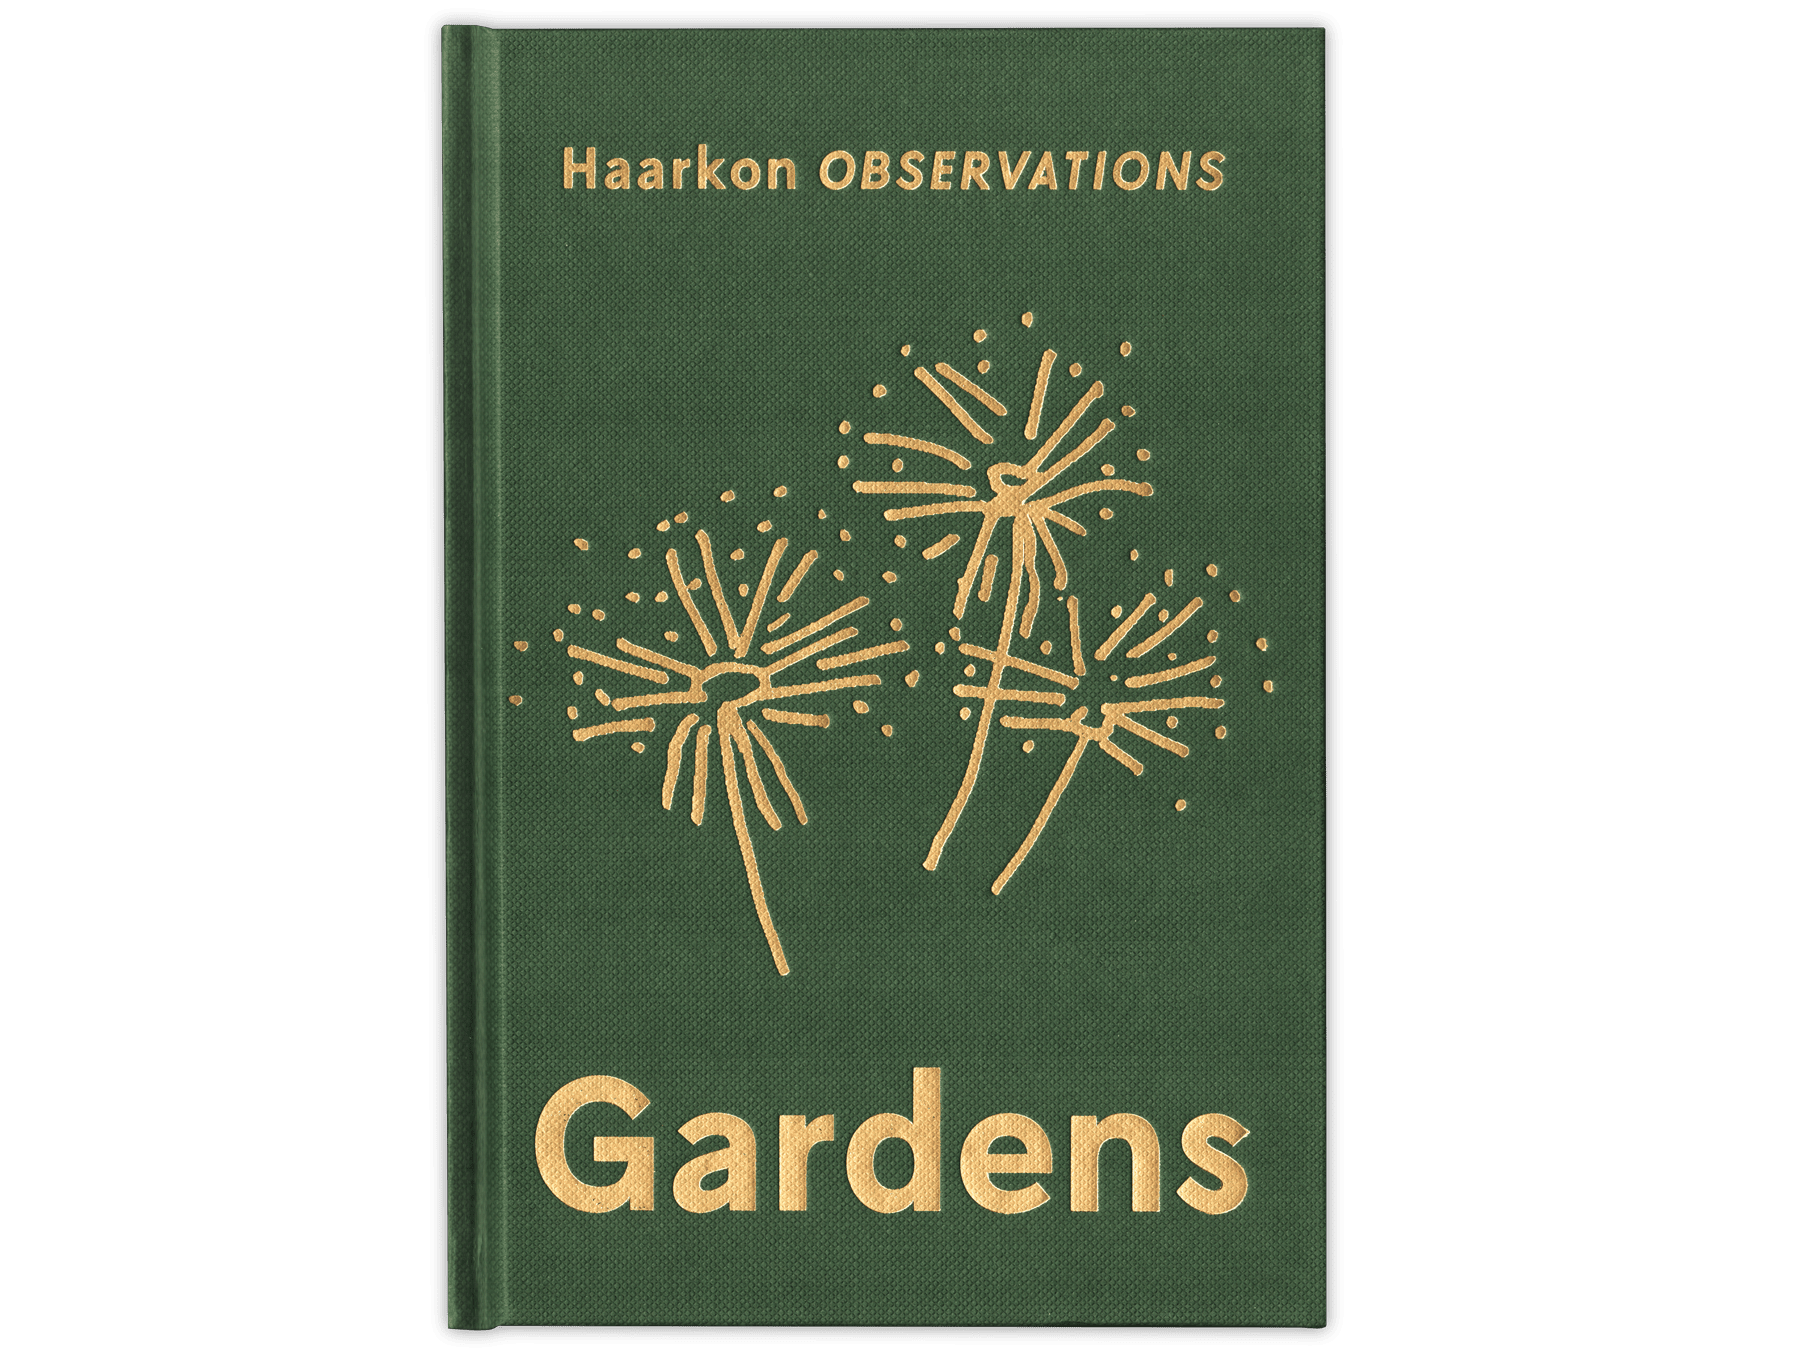 Haarkon Observations Gardens cover